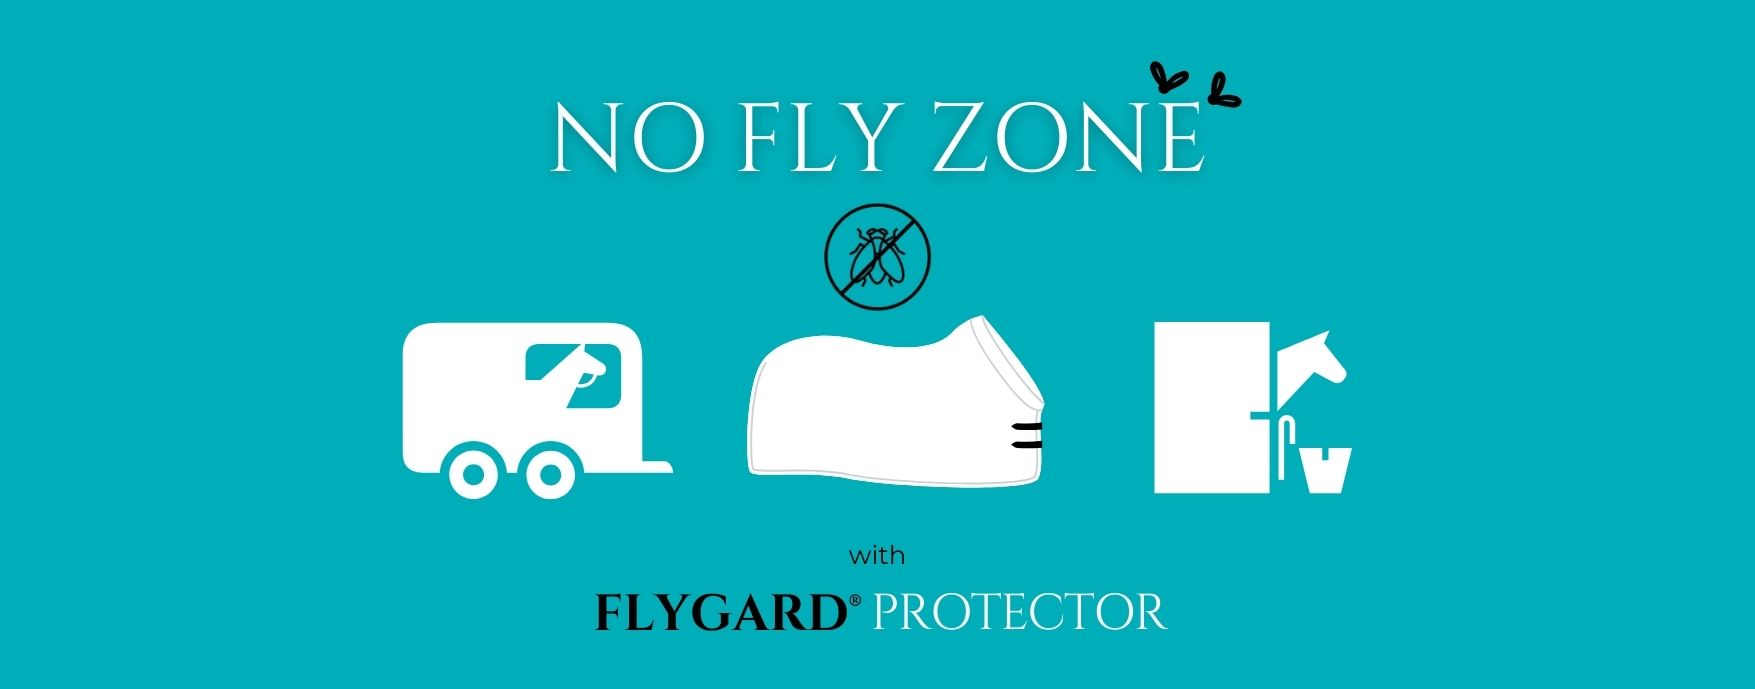 No fly zone